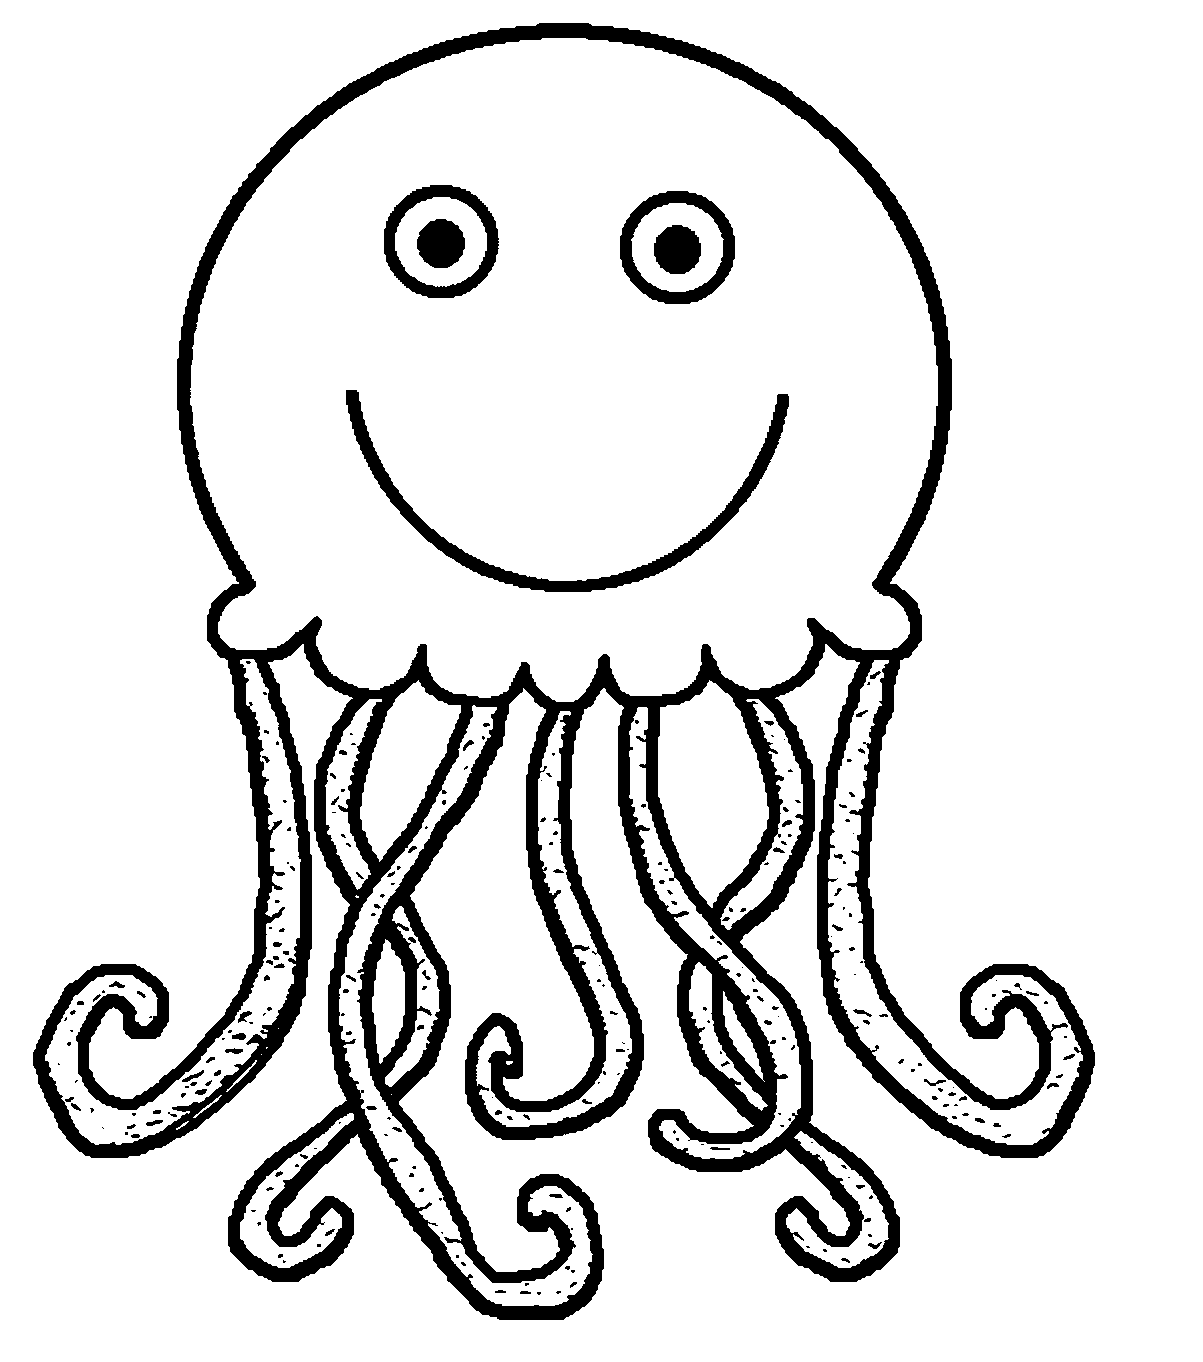 Jellyfish clip art 7 wikiclipart